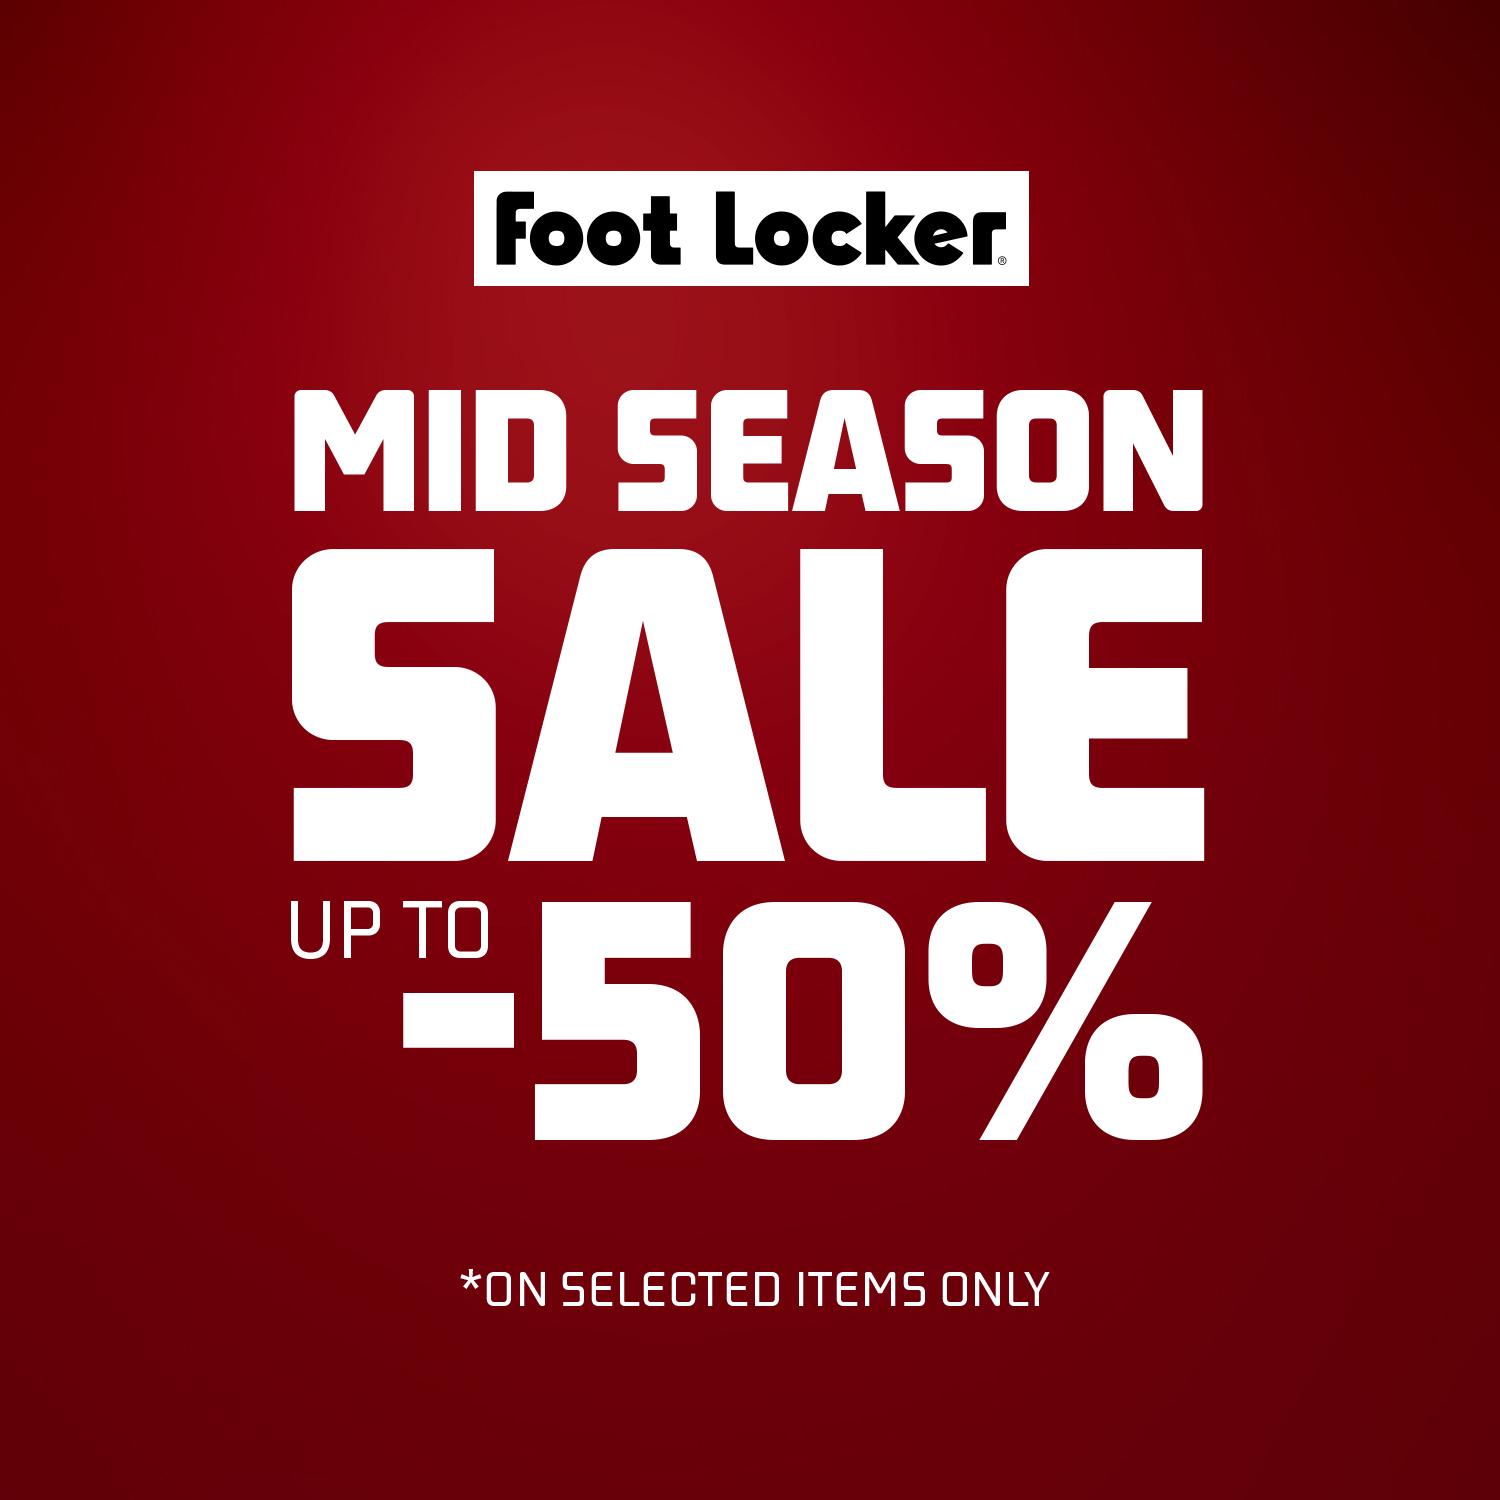 Foot Locker Mid Season Sale